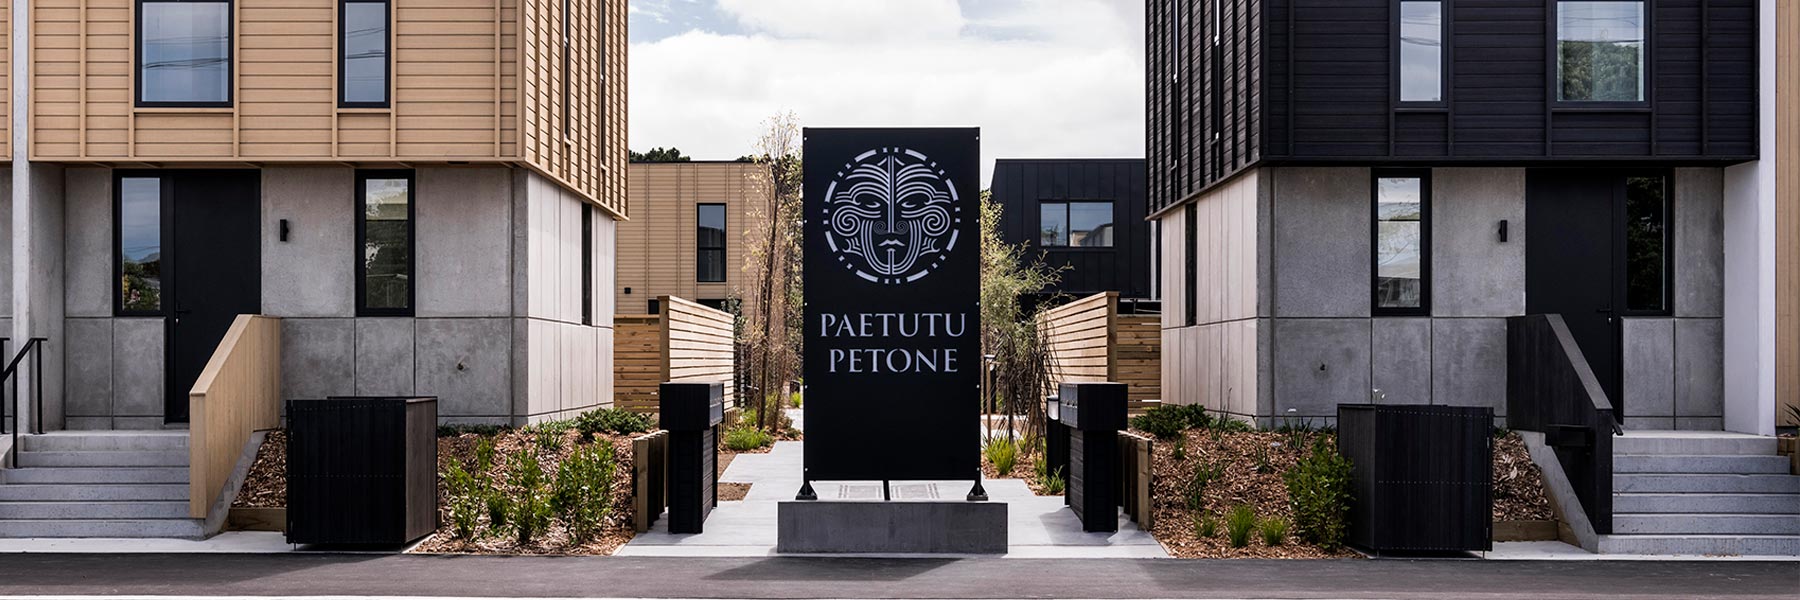 Homestead Construction Paetutu Development Petone